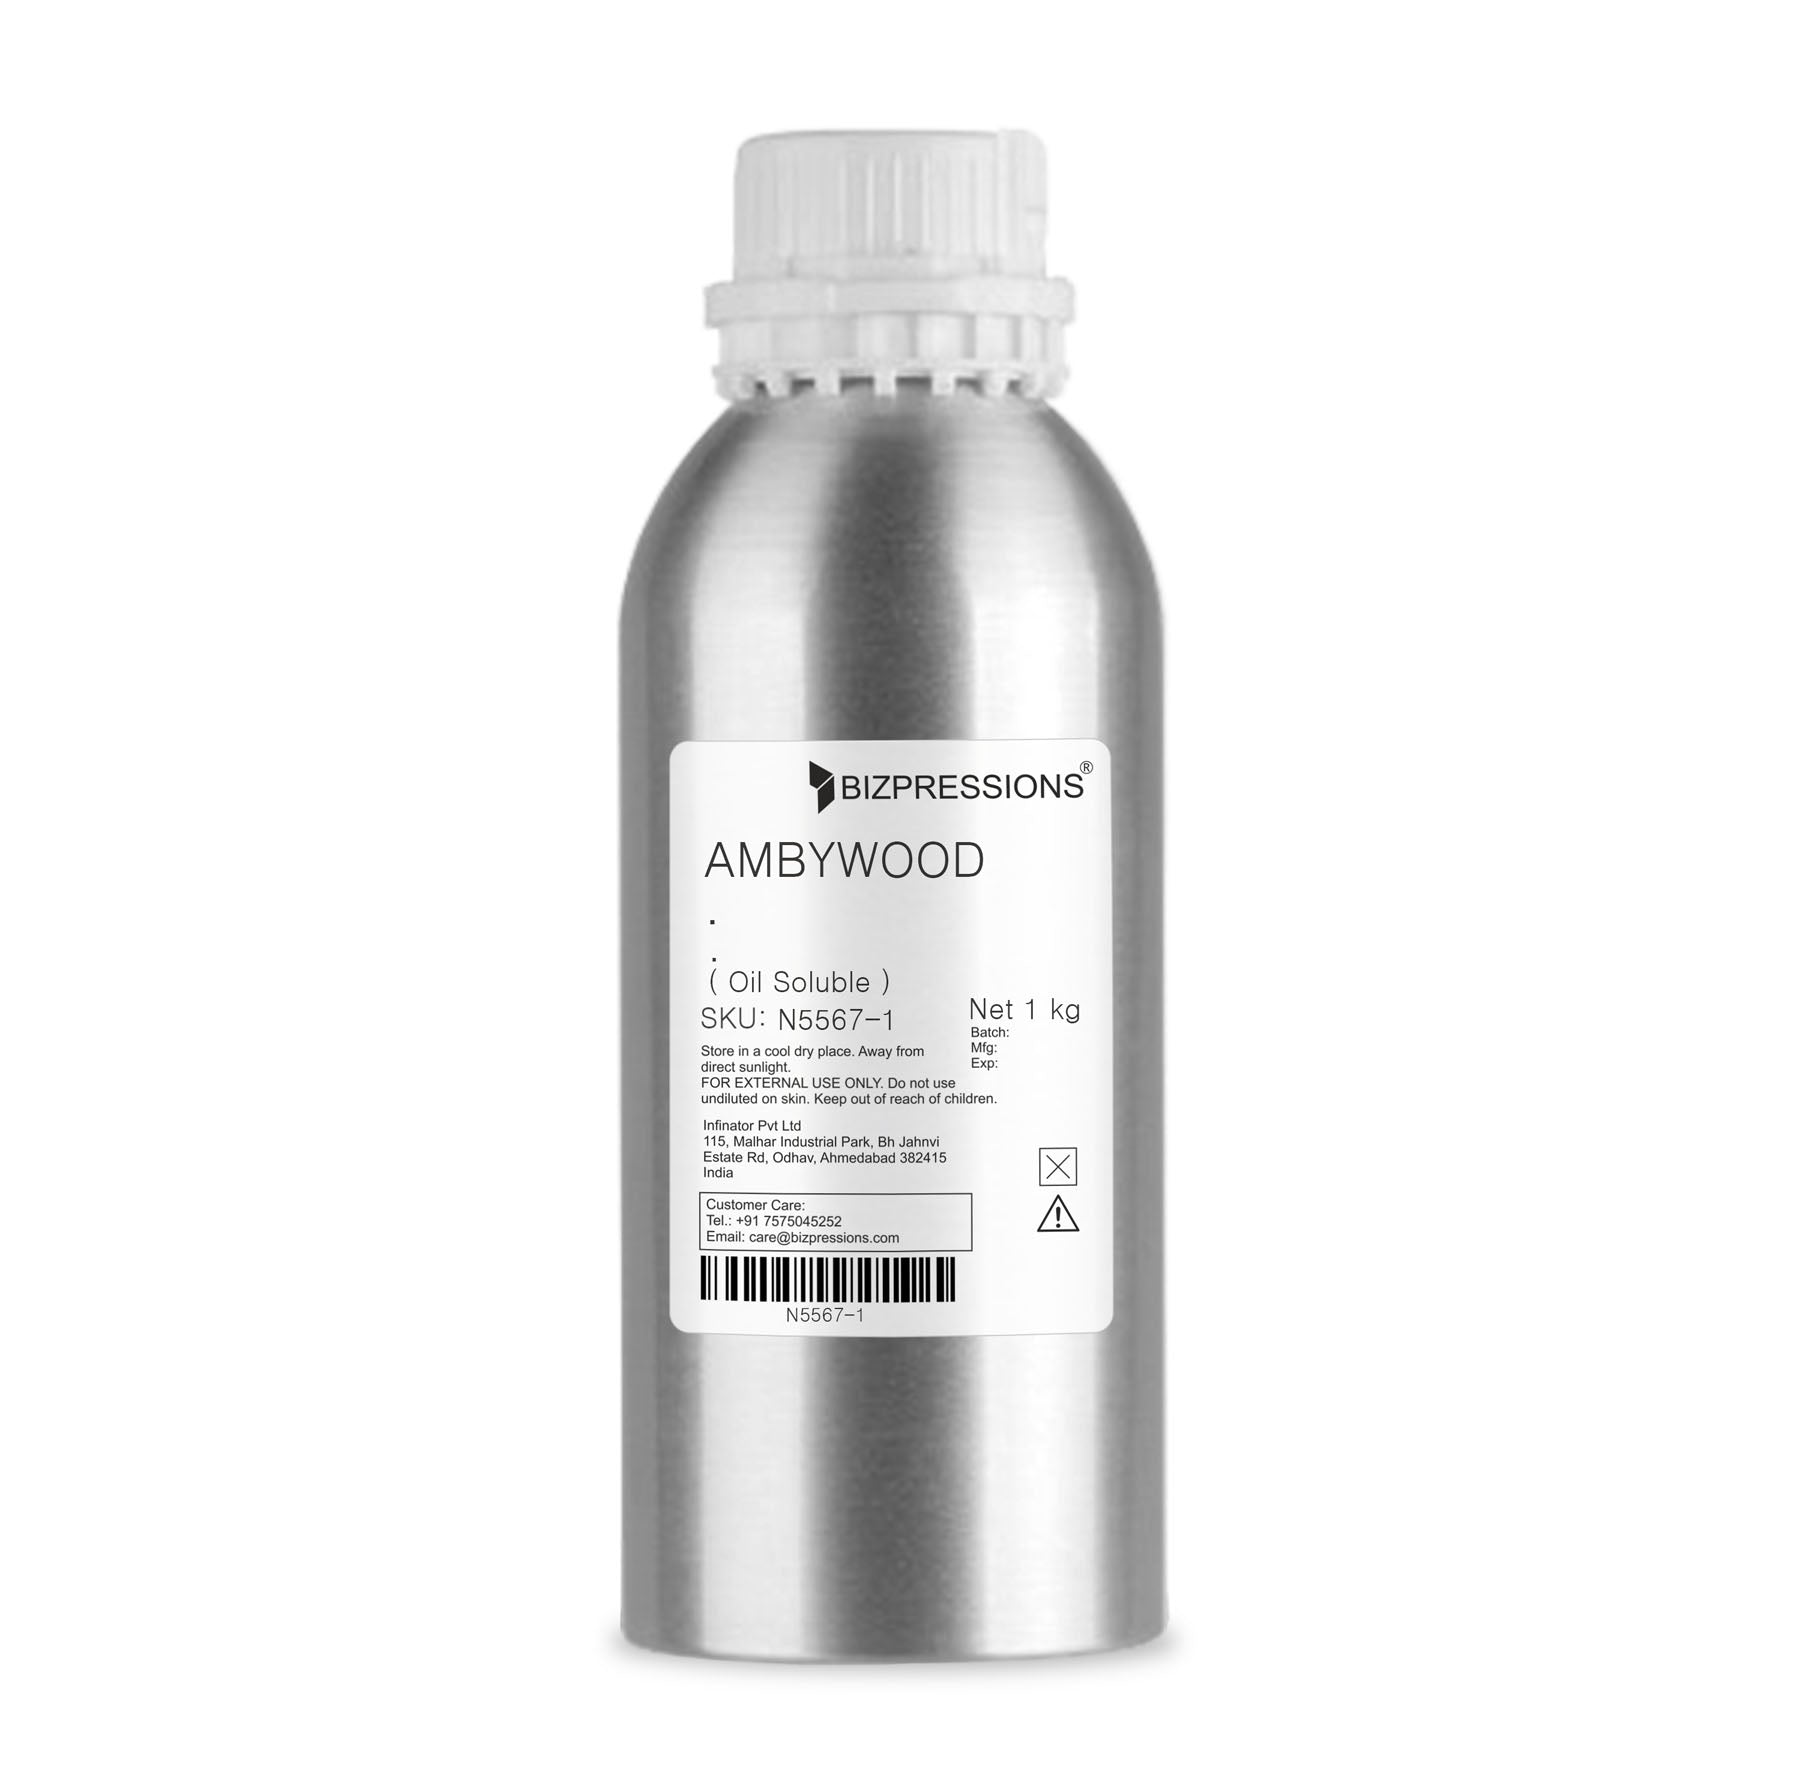 AMBYWOOD - Fragrance ( Oil Soluble ) - 1 kg